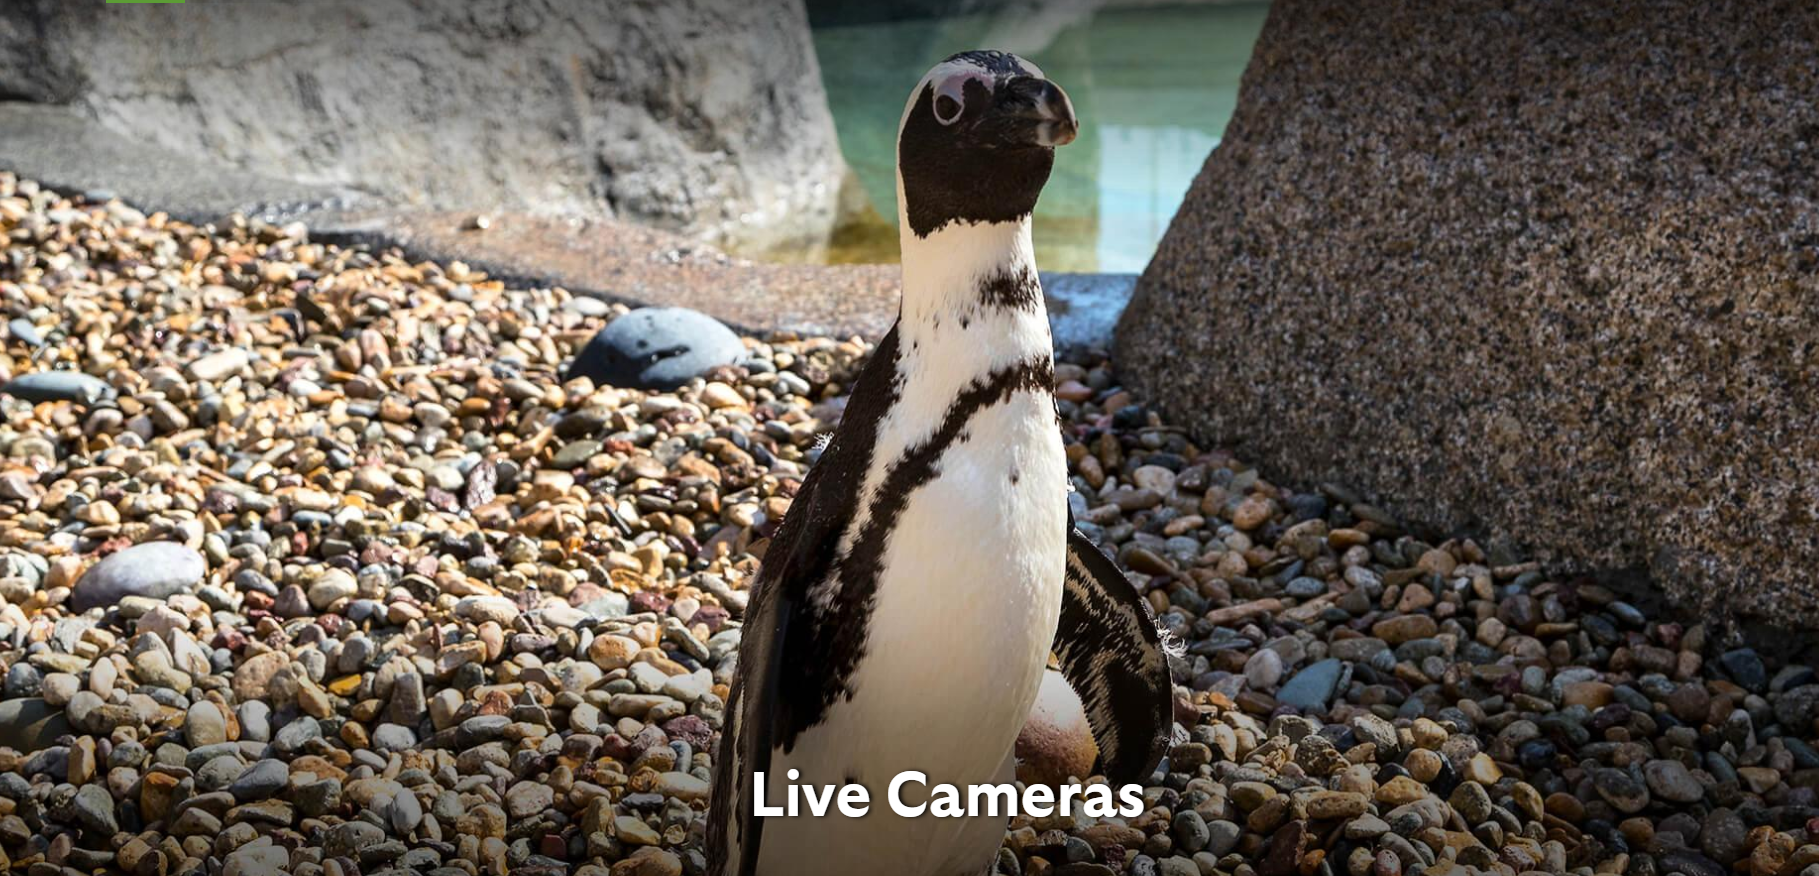 San Diego Zoo Live Cameras